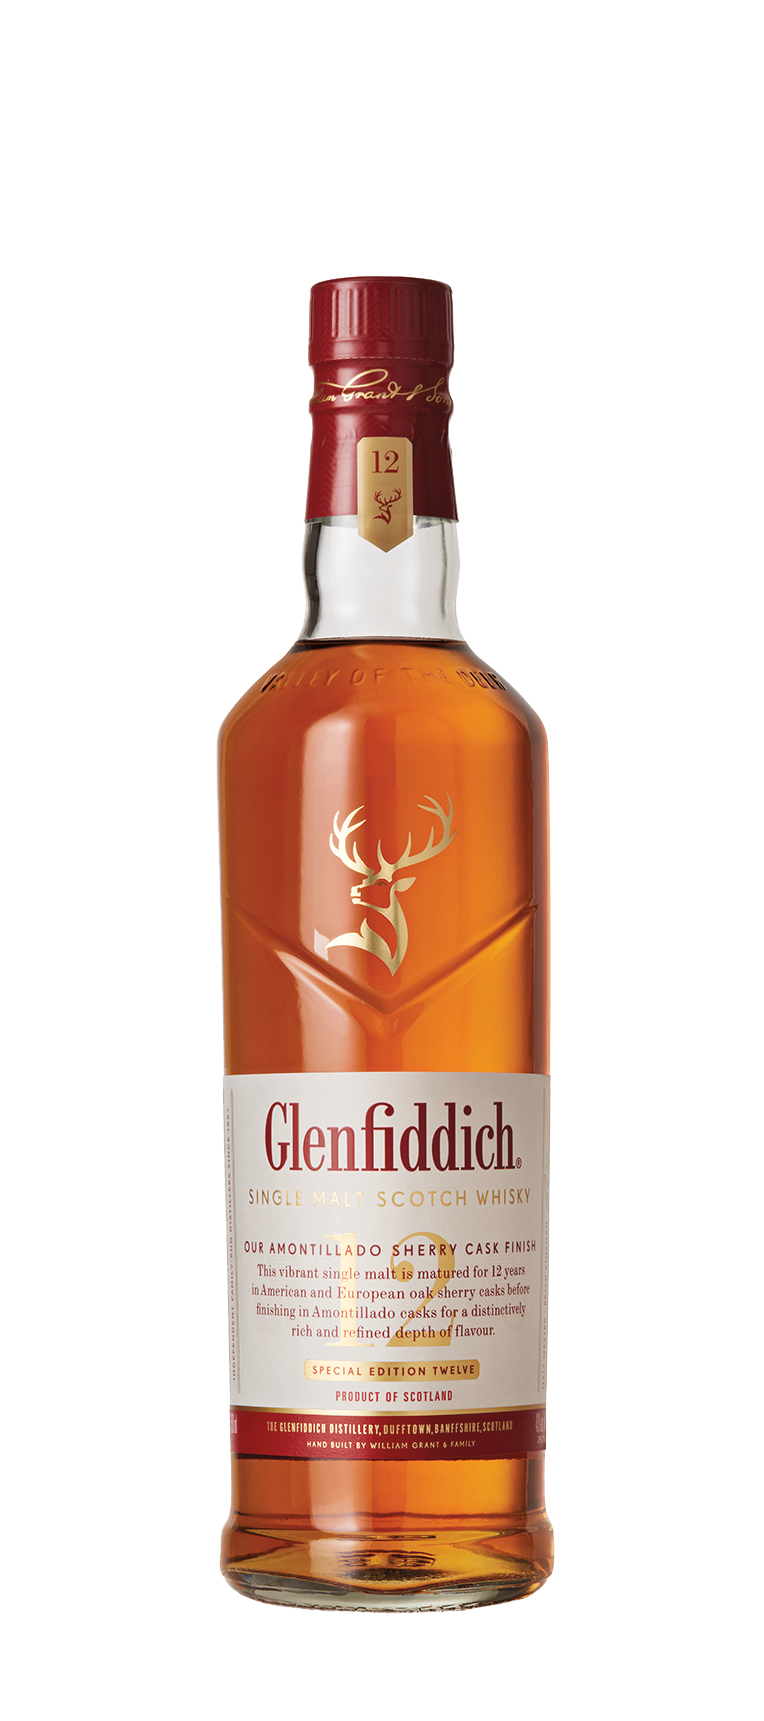 Glenfiddich 12 Year Old Amontillado Sherry Cask Finish